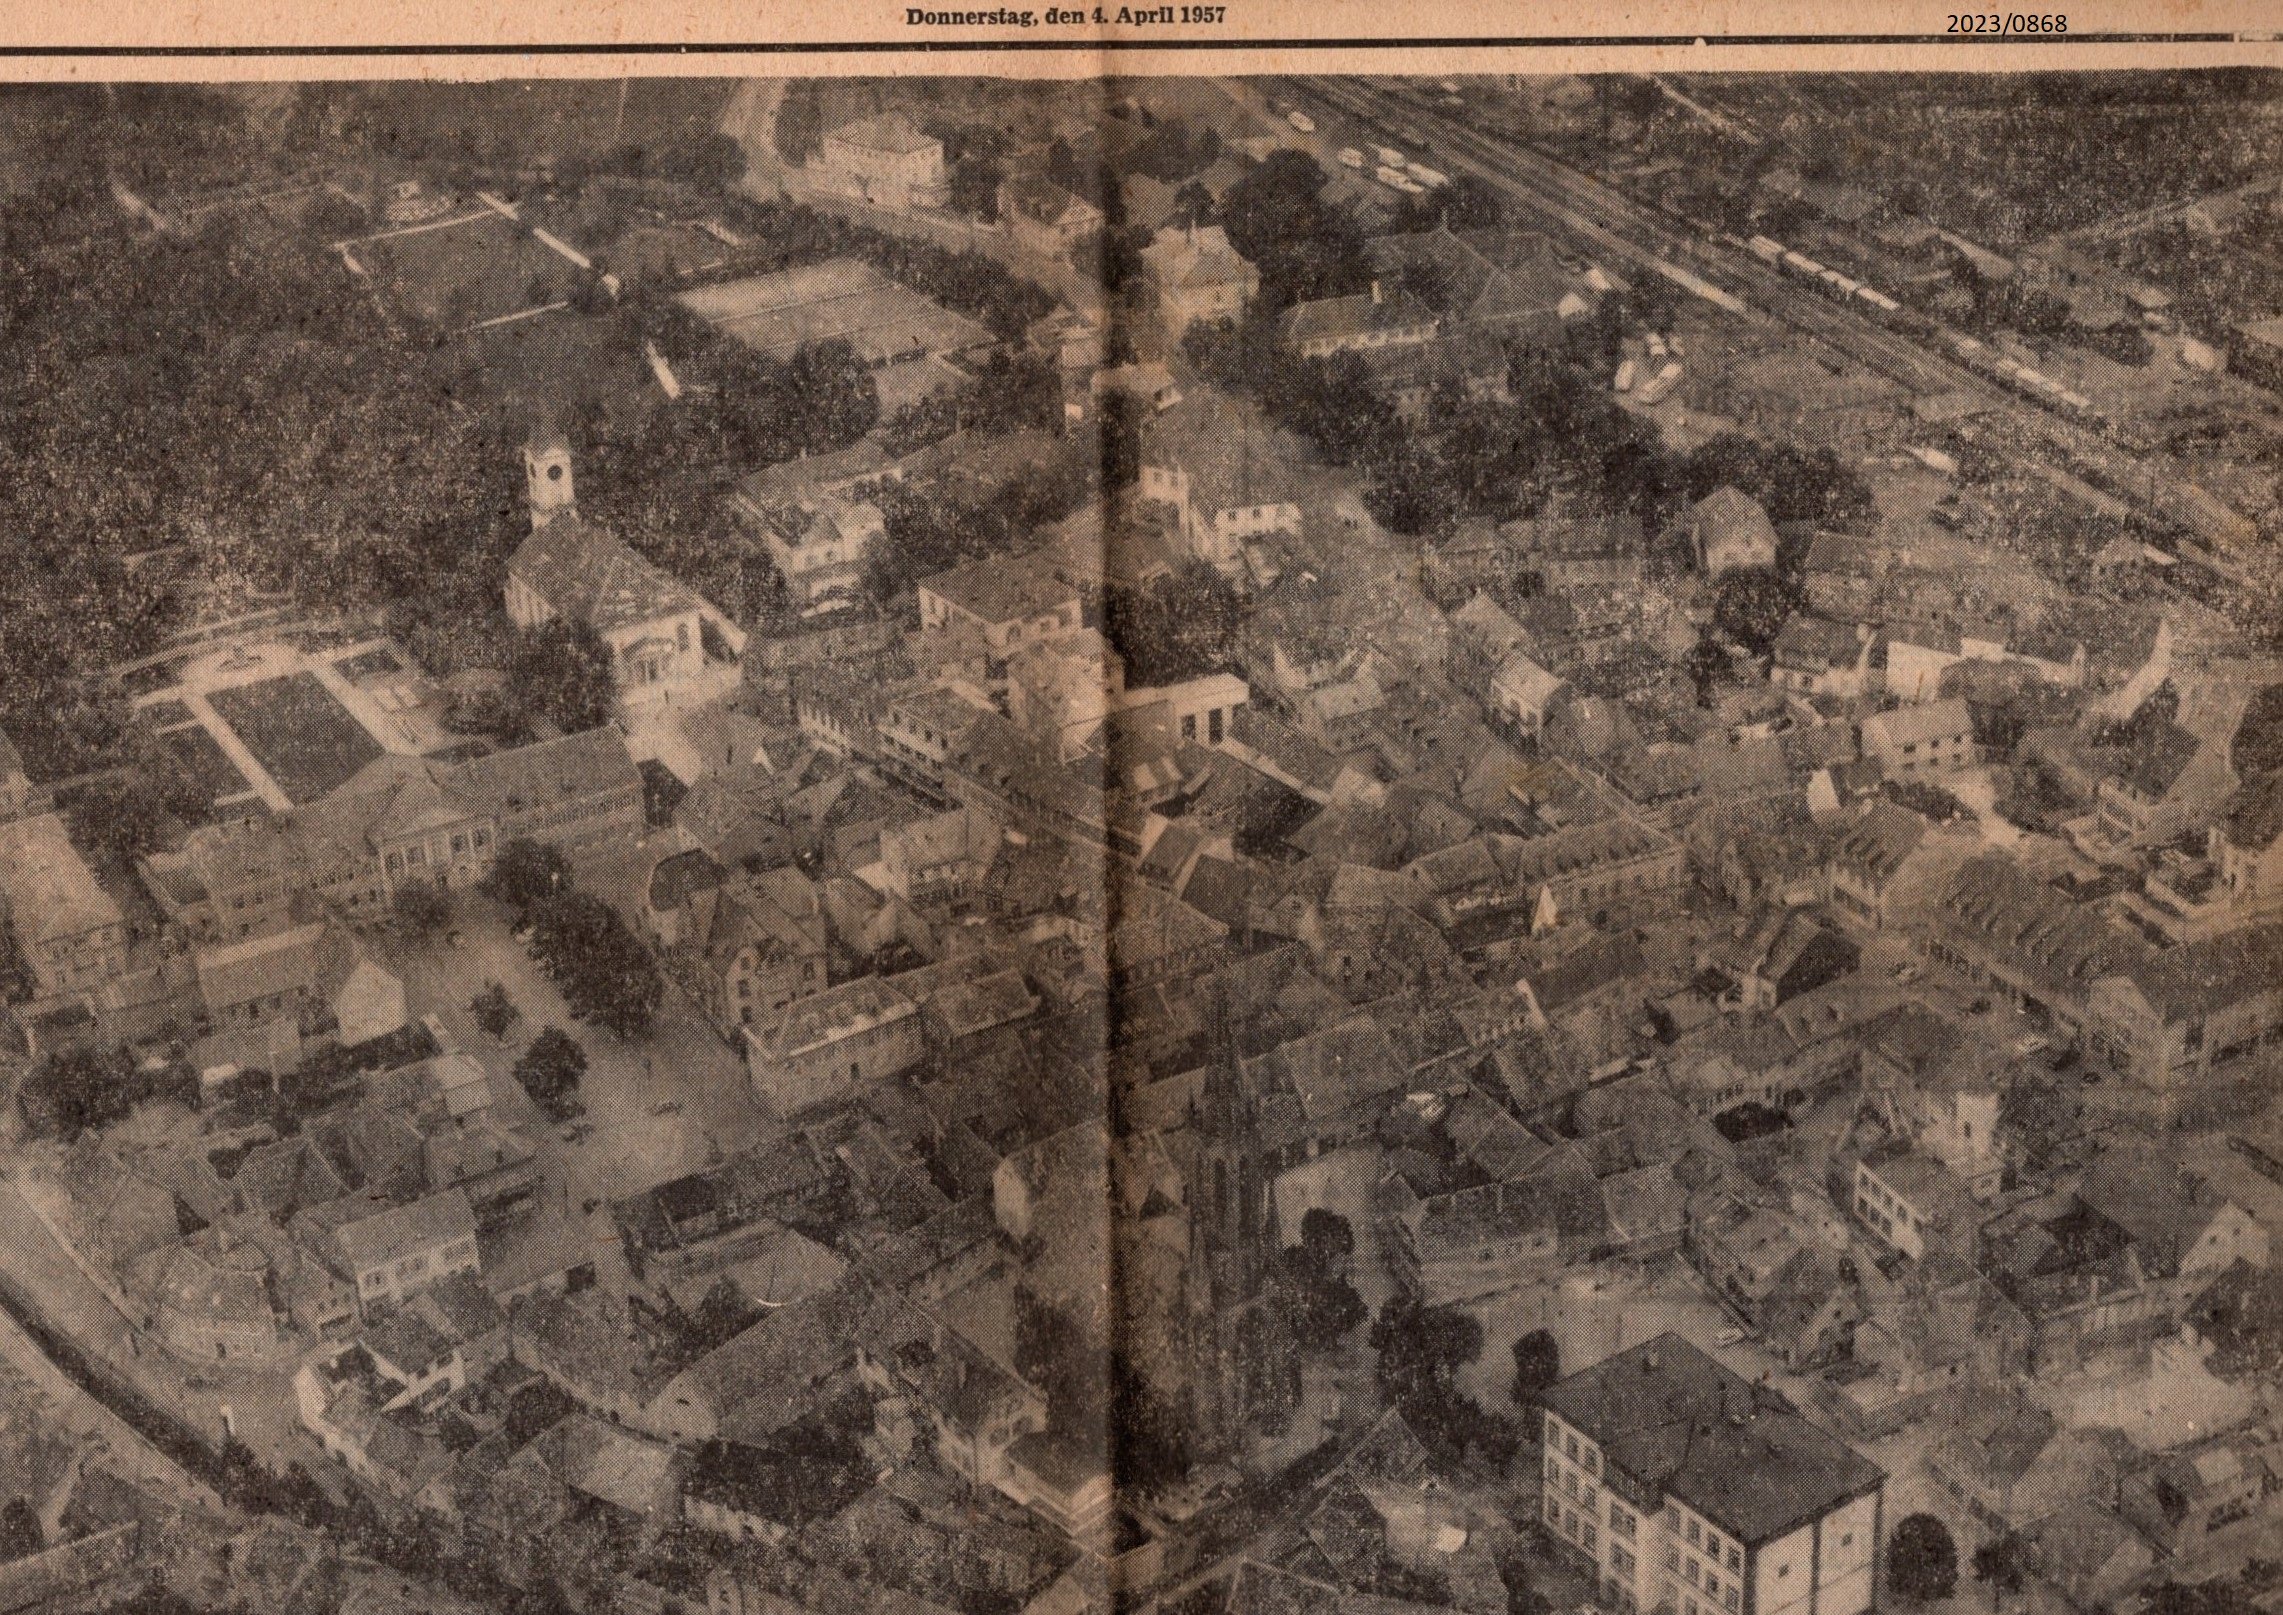 Zeitungsseite 4. April 1957 mit Luftaufnahme Bad Dürkheims (Stadtmuseum Bad Dürkheim im Kulturzentrum Haus Catoir CC BY-NC-SA)